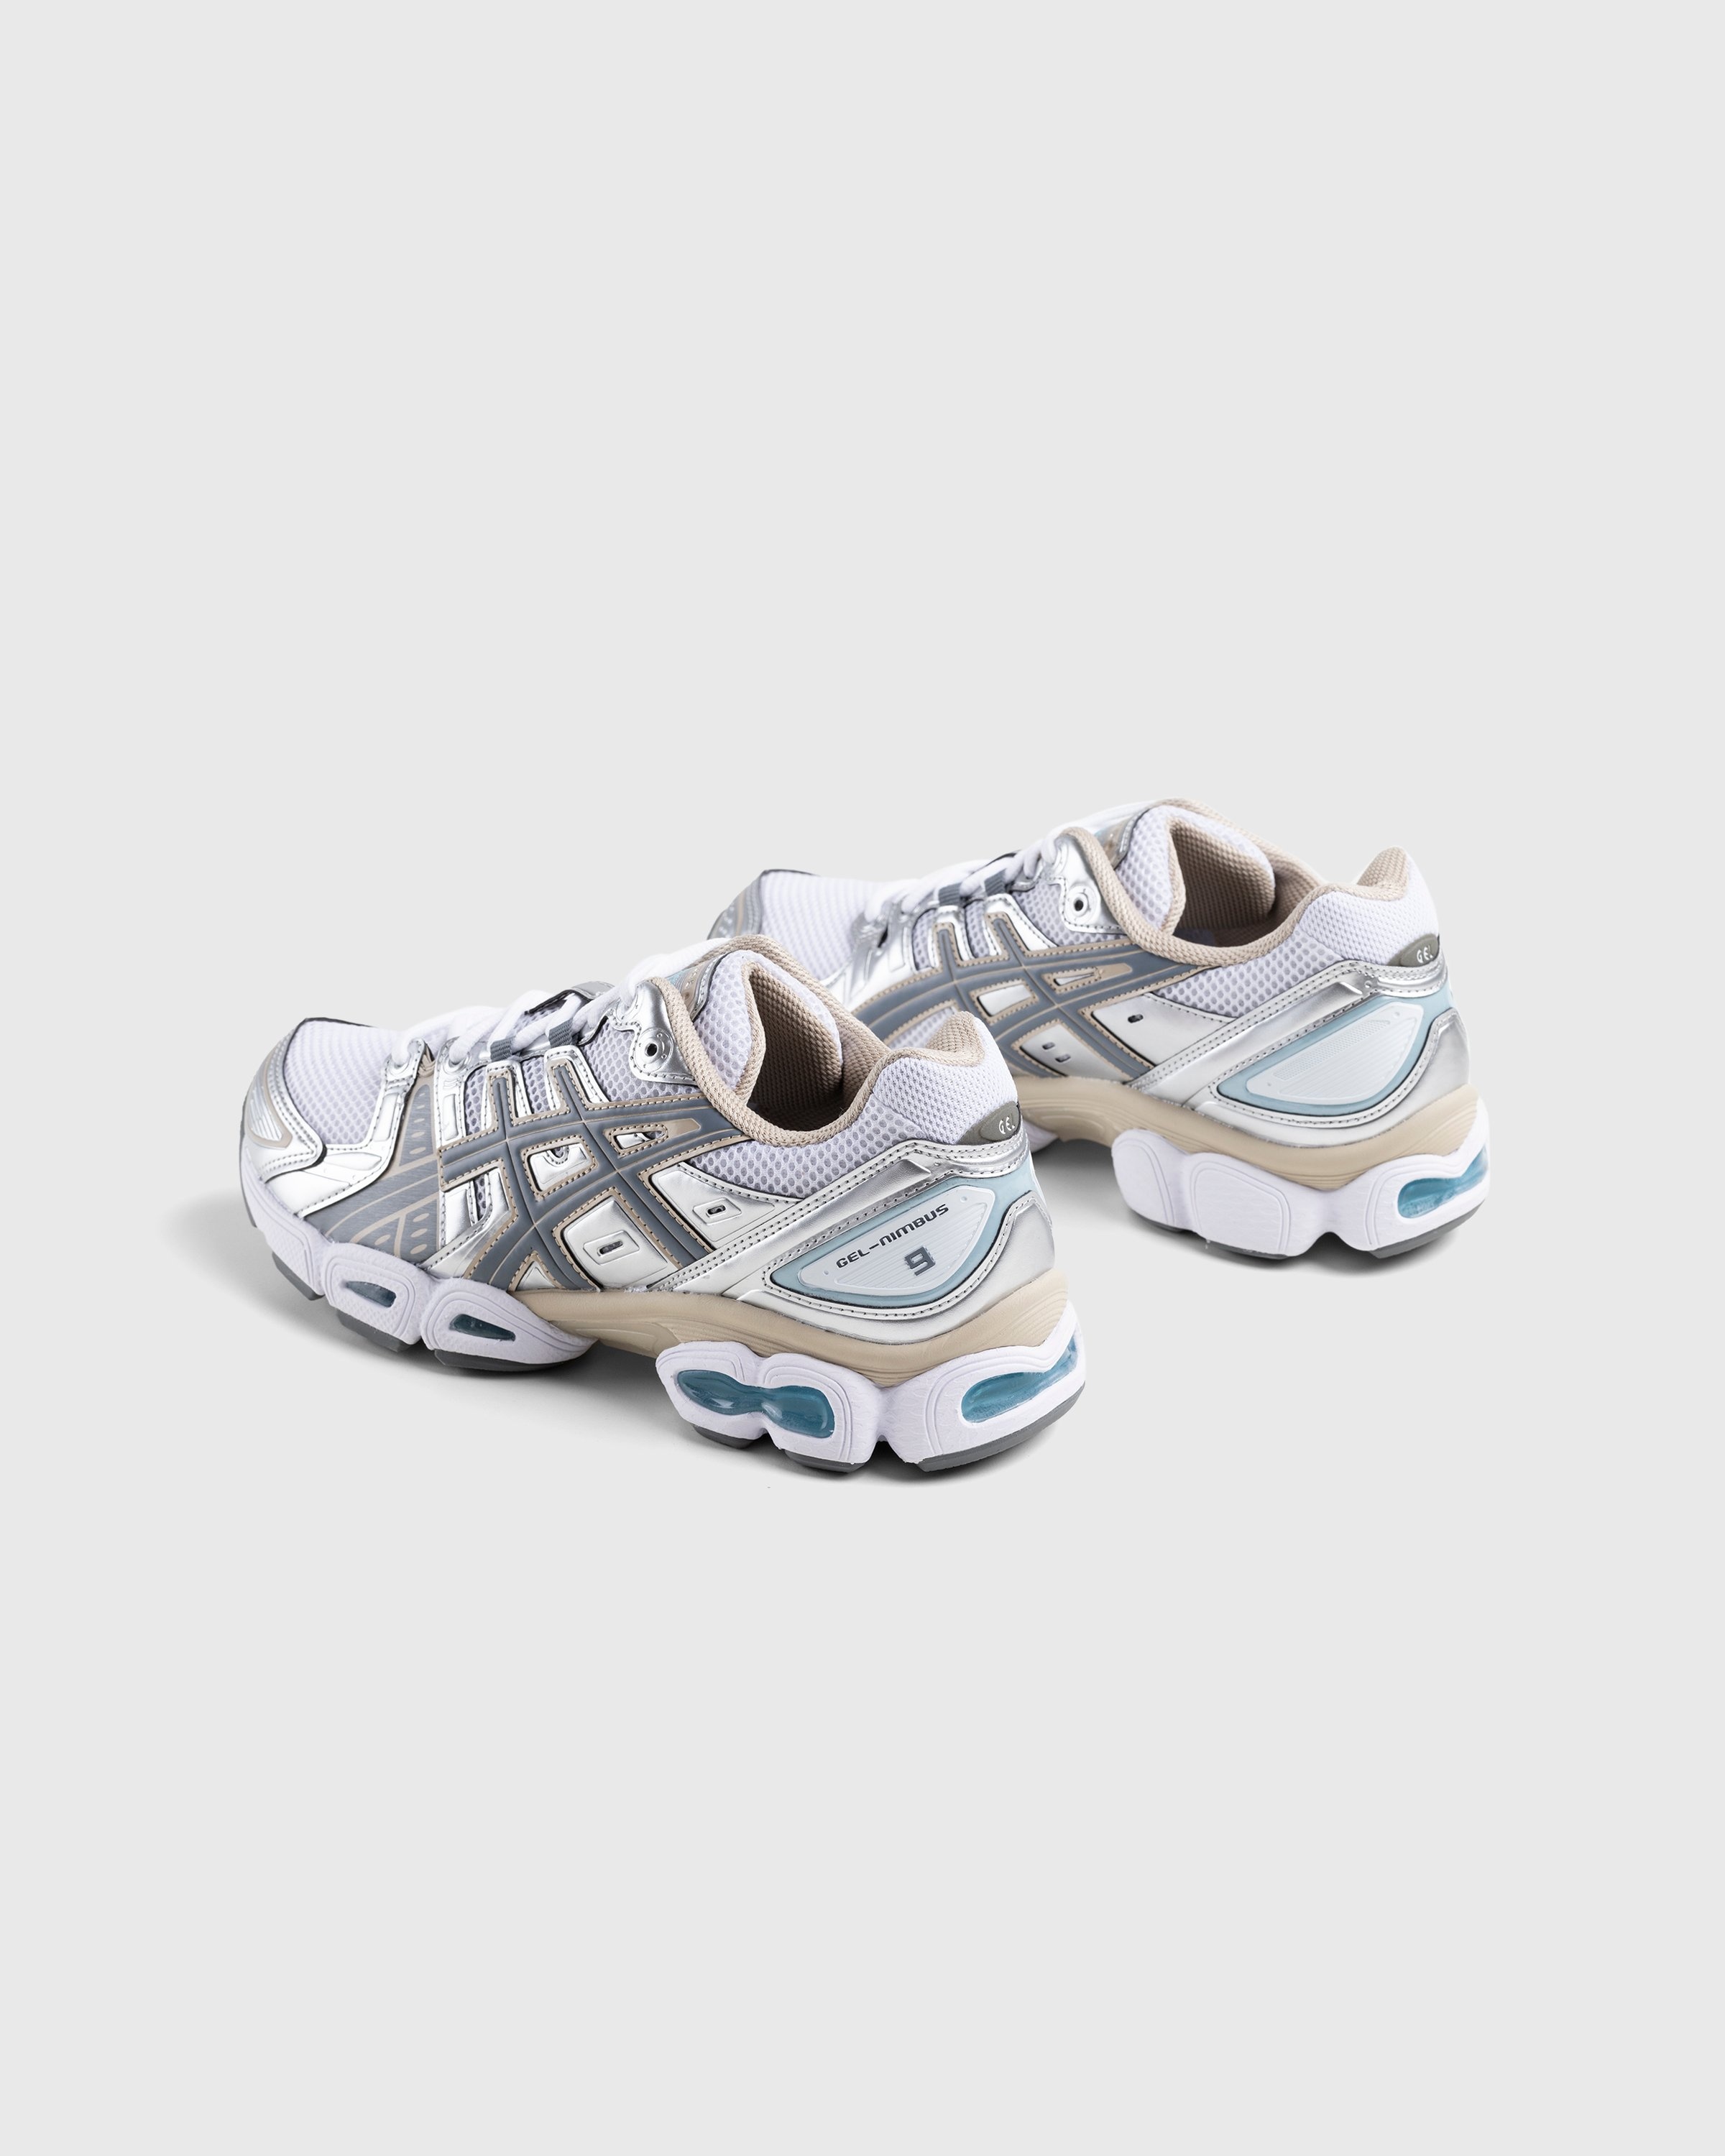 asics – Gel-Nimbus 9 White/Steel Grey - Low Top Sneakers - White - Image 5